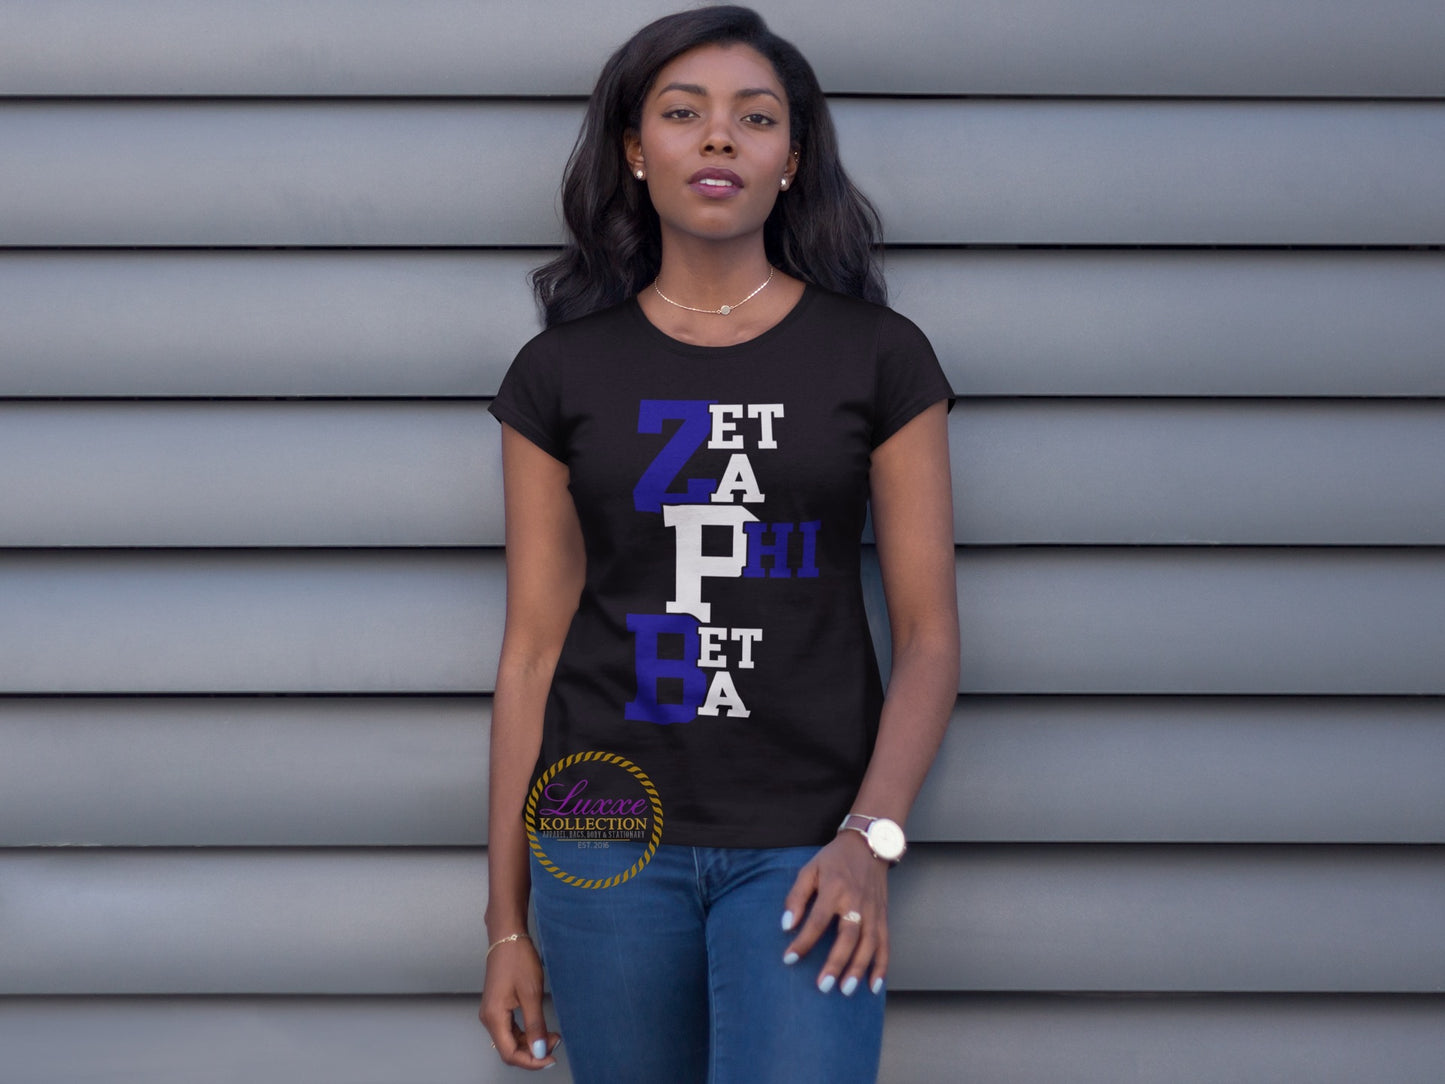 Zeta Phi Beta T-shirt